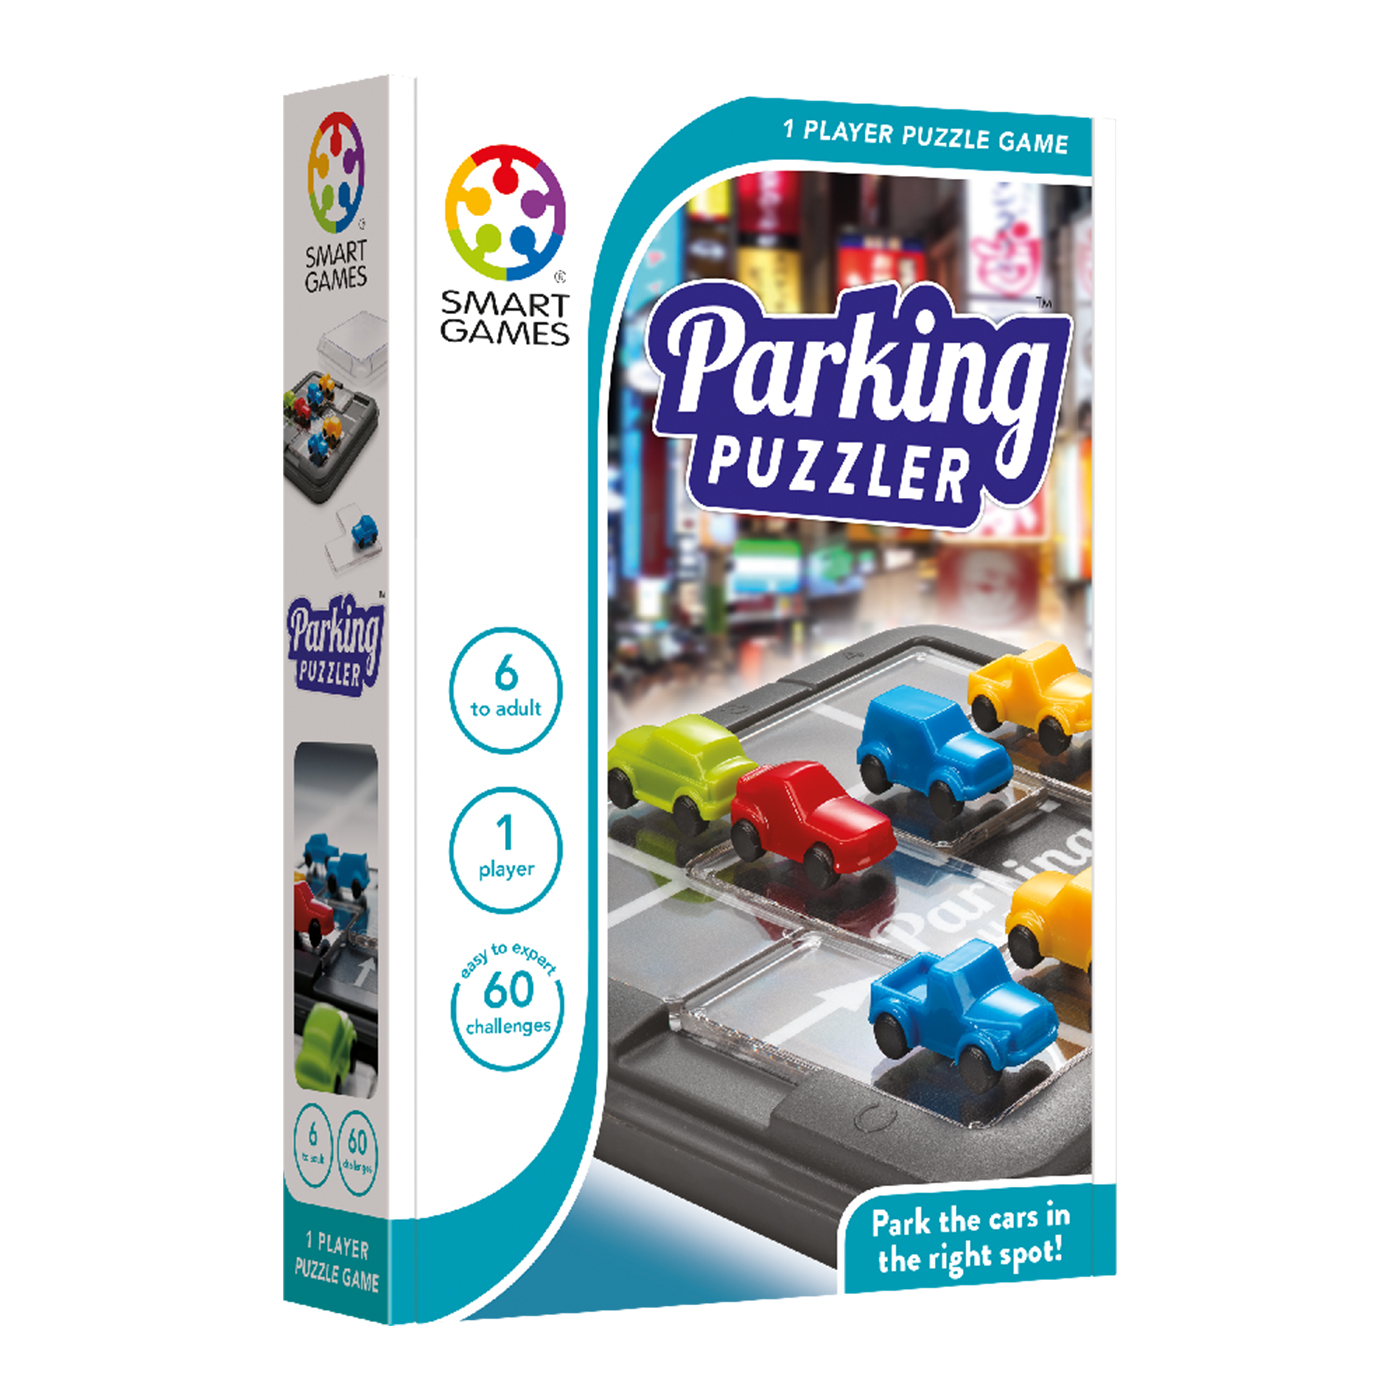 SMARTGAMES SmartGames Parking Puzzler